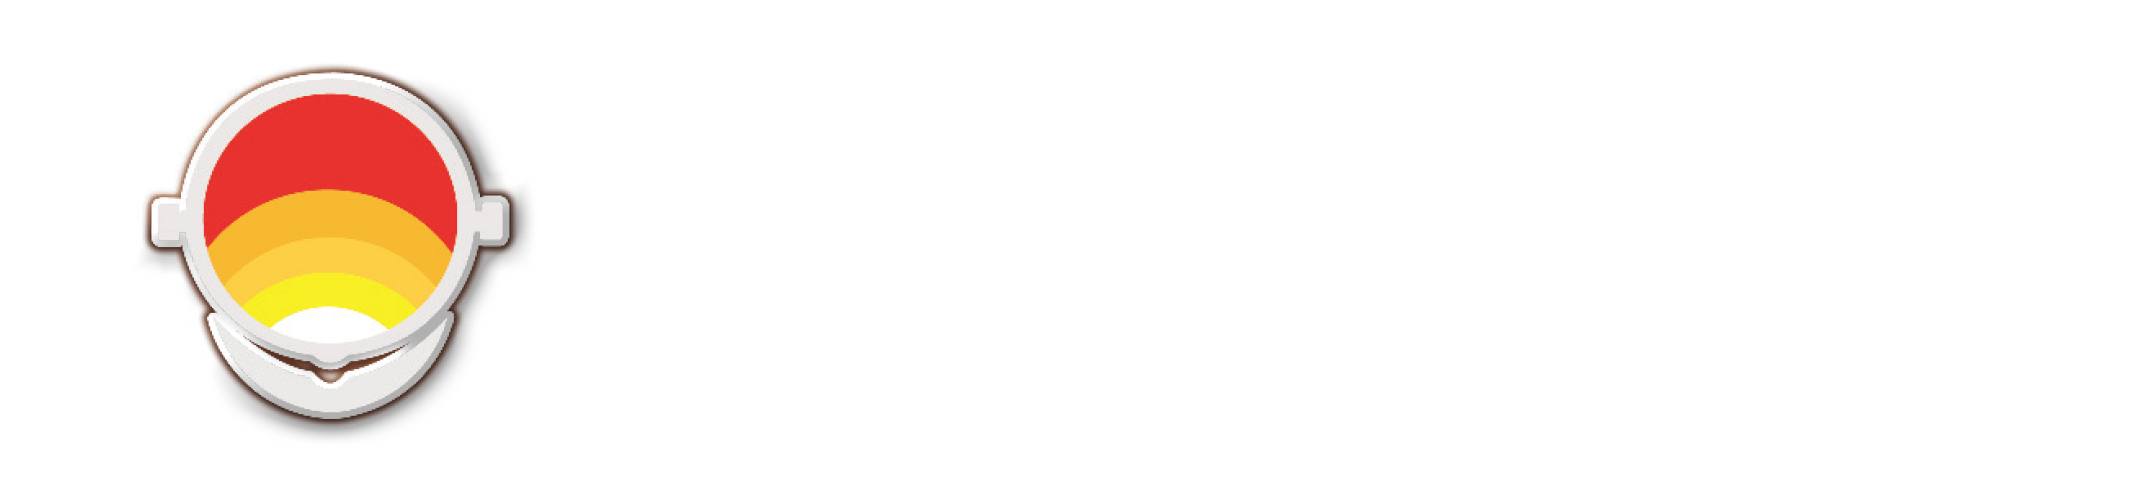 Ser dokum logo white